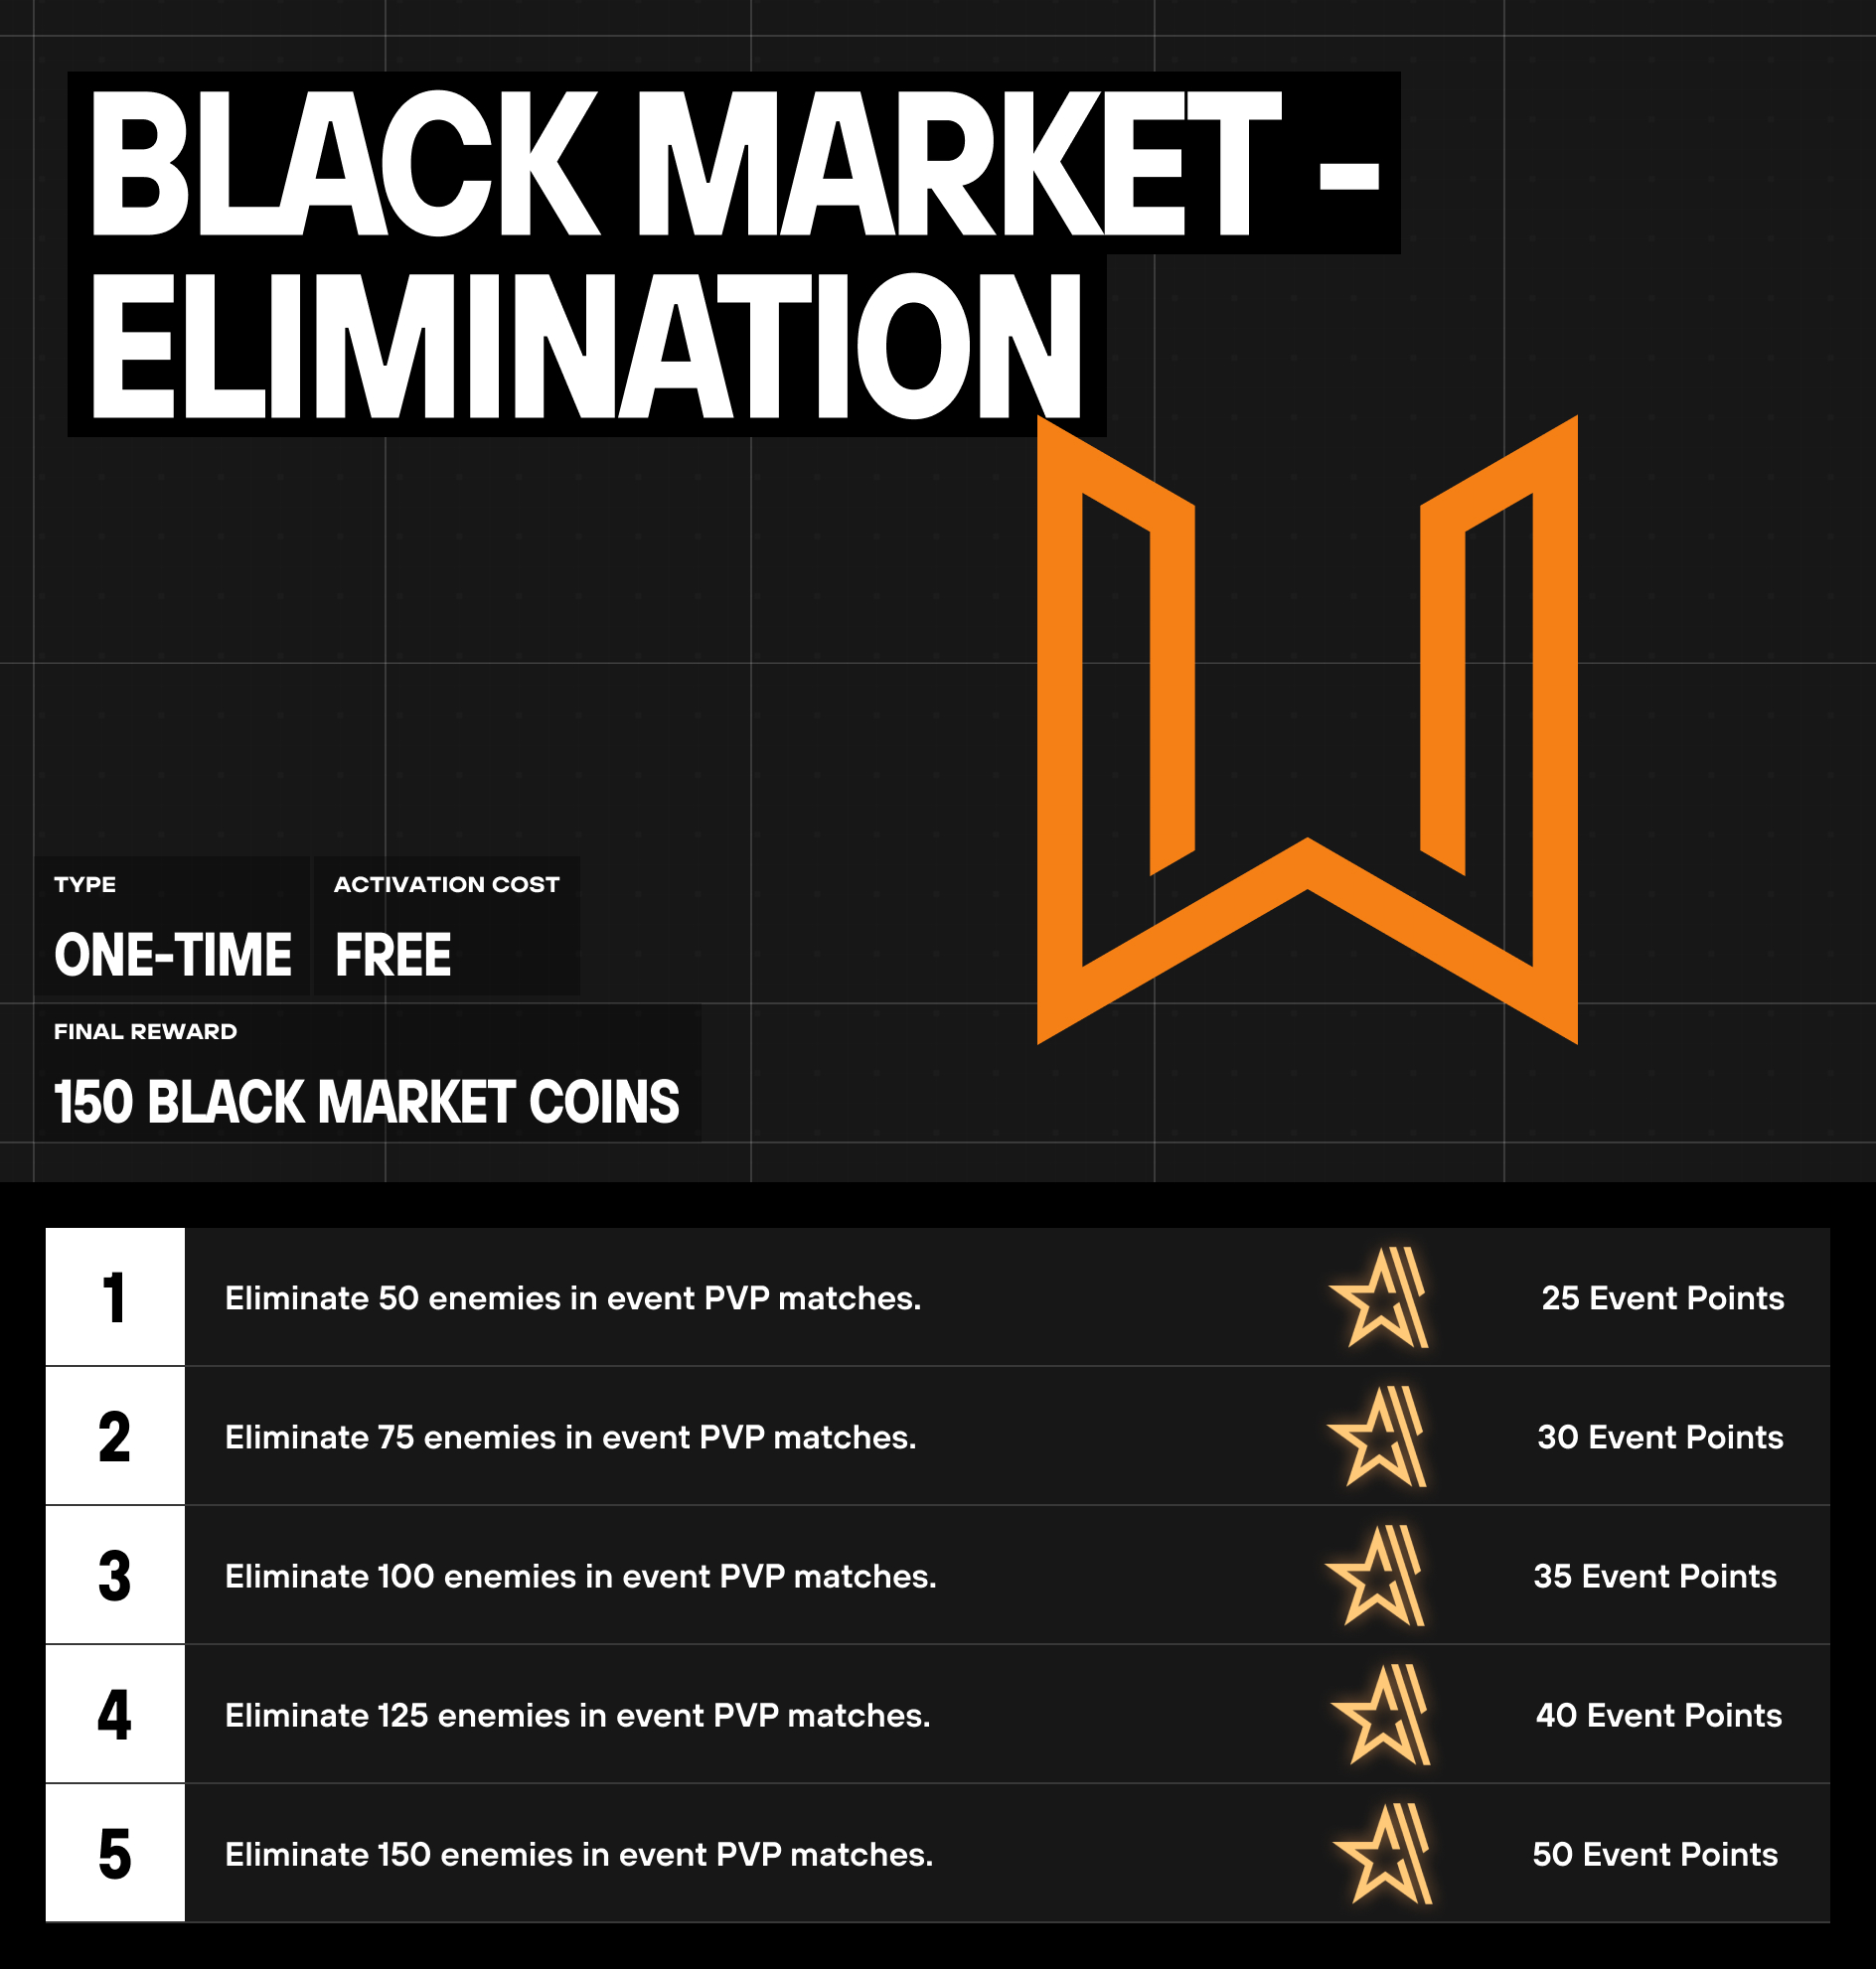 Black Market - Elimination